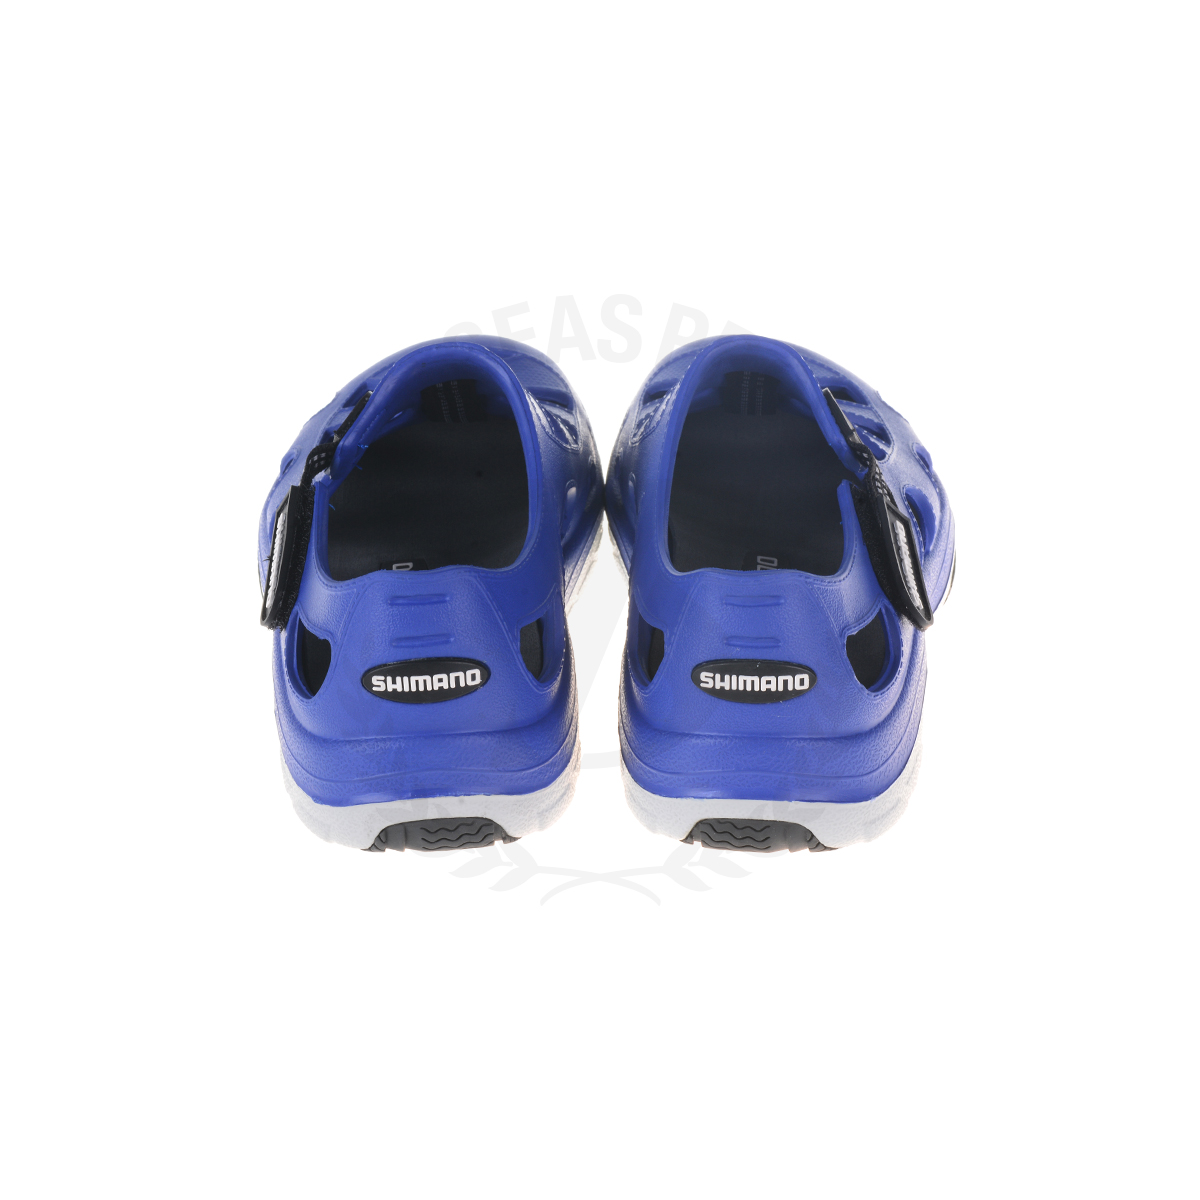 Shimano Evair Size-11 #Poison Blue-Gray*Shoes SEAS PROSHOP, 53% OFF